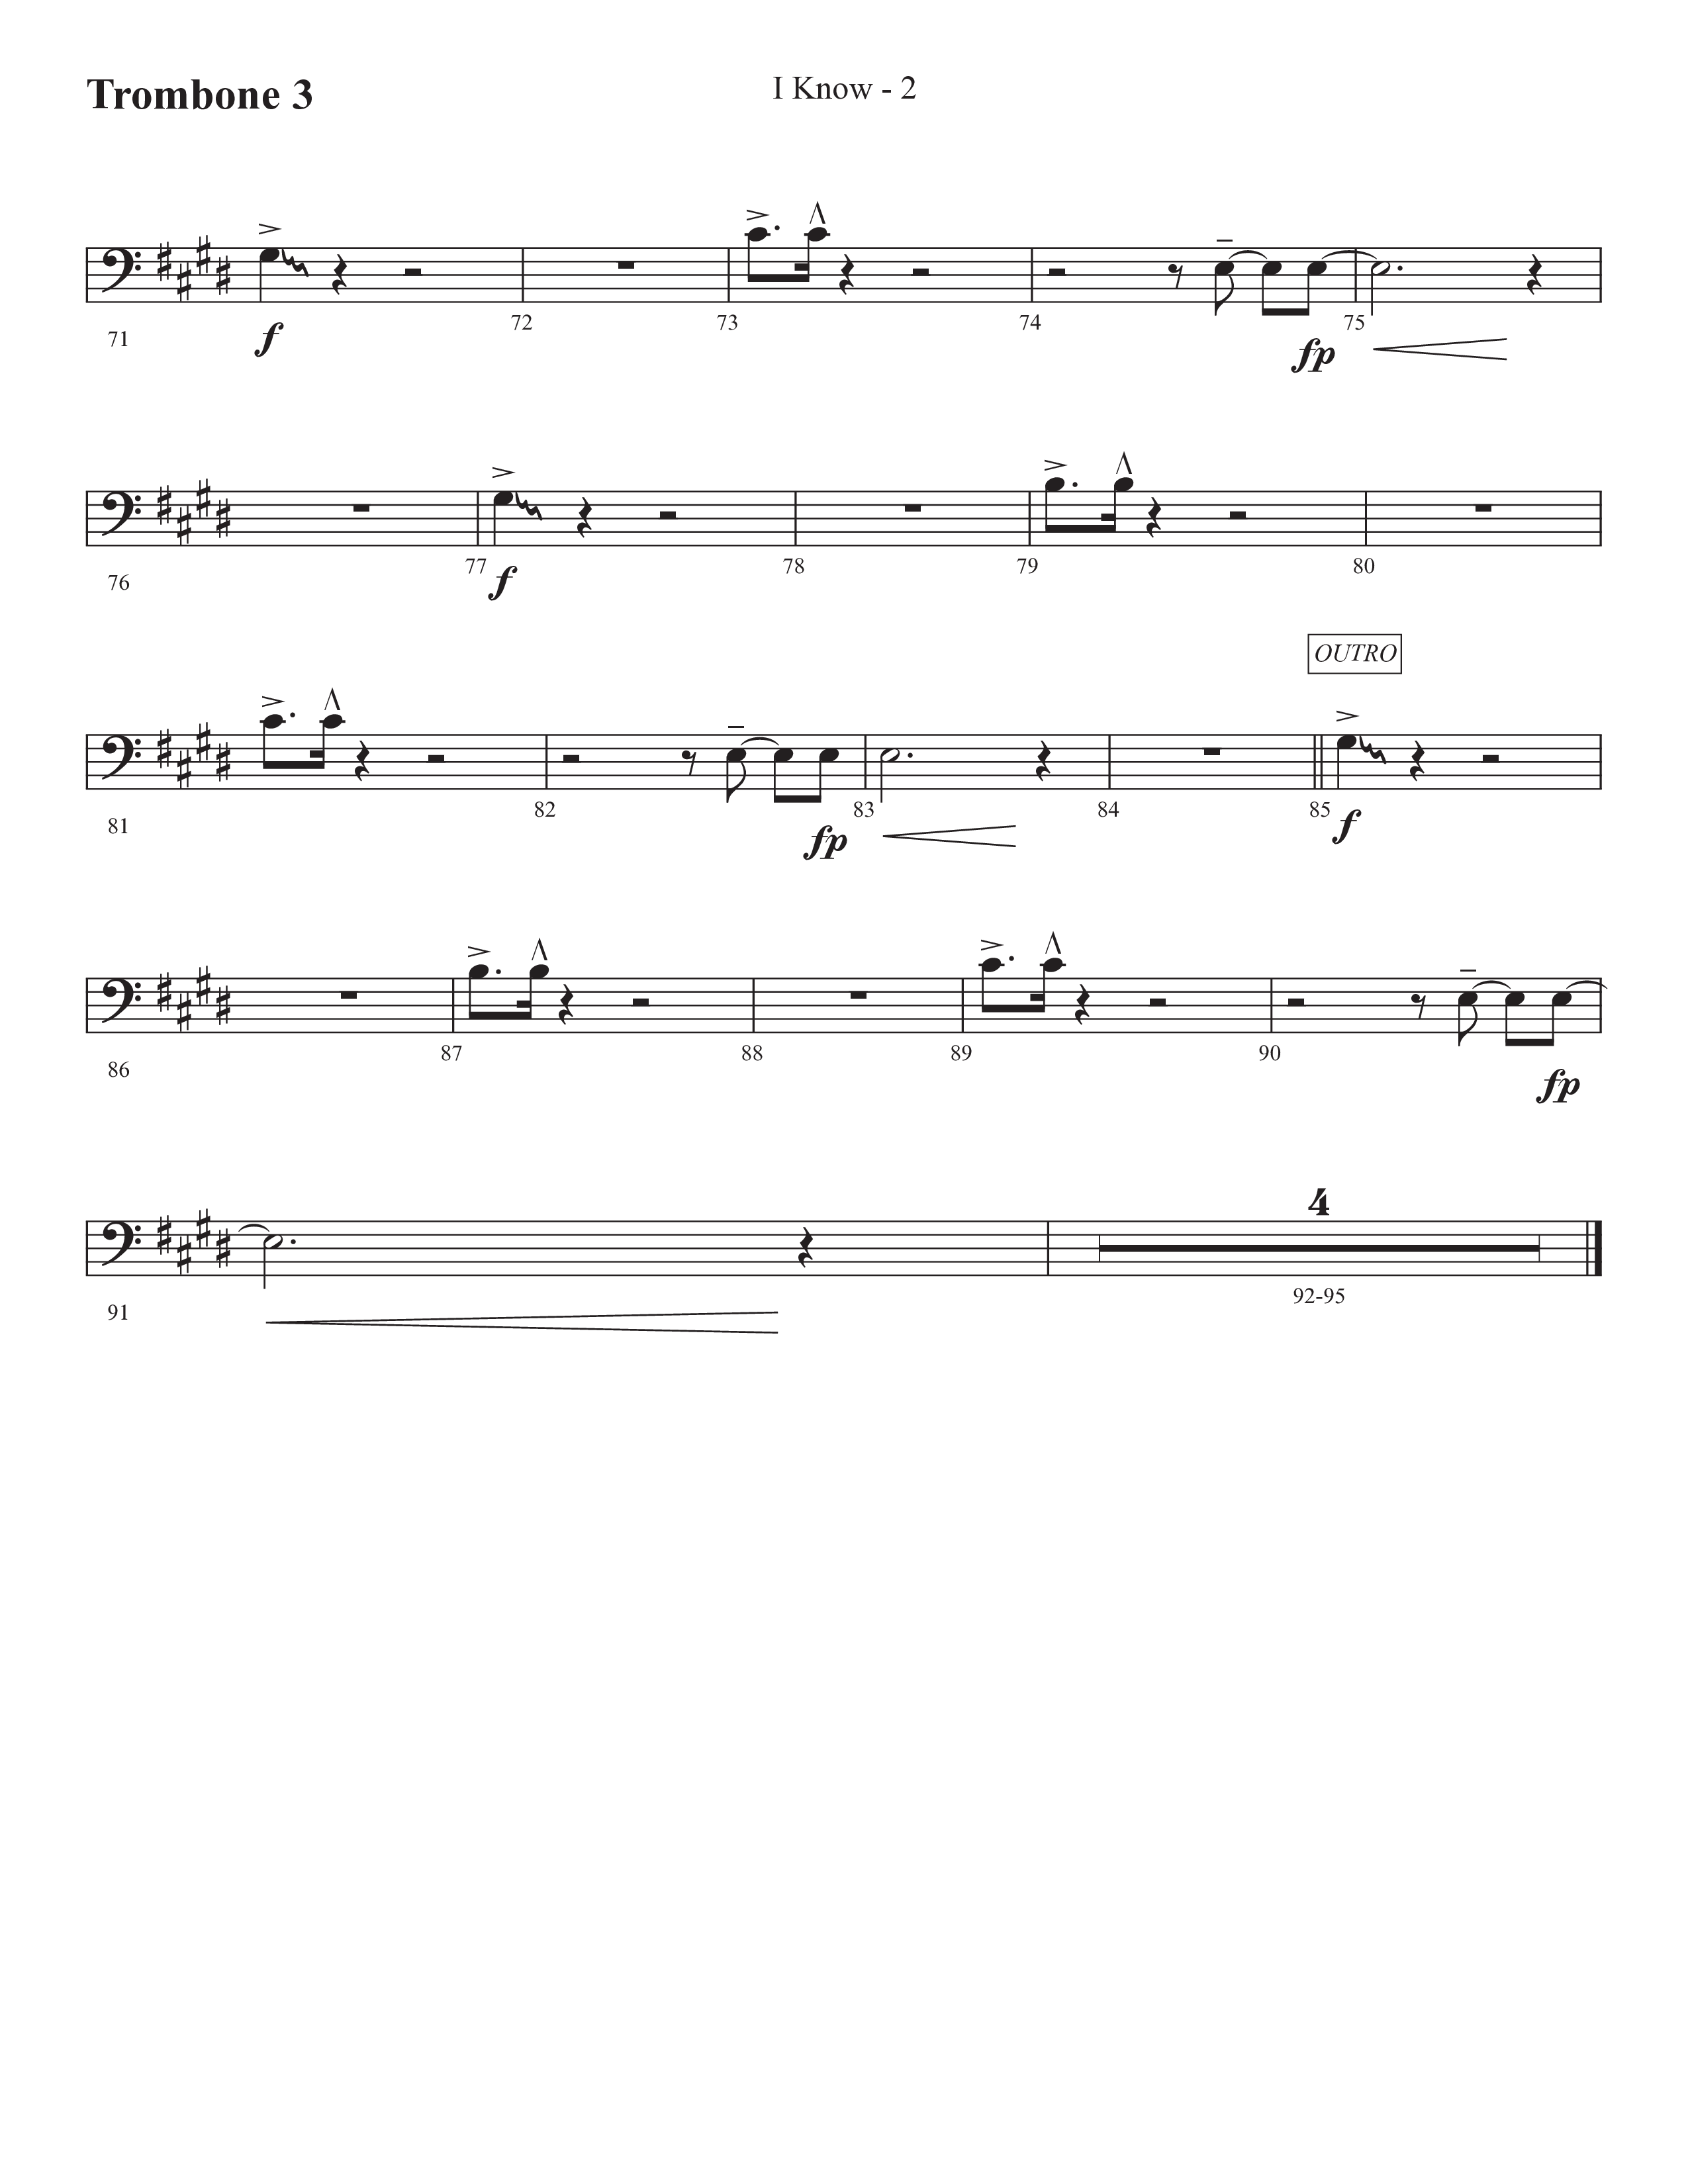 I Know (Choral Anthem SATB) Trombone 3 (Prestonwood Worship / Prestonwood Choir / Arr. Jonathan Walker)